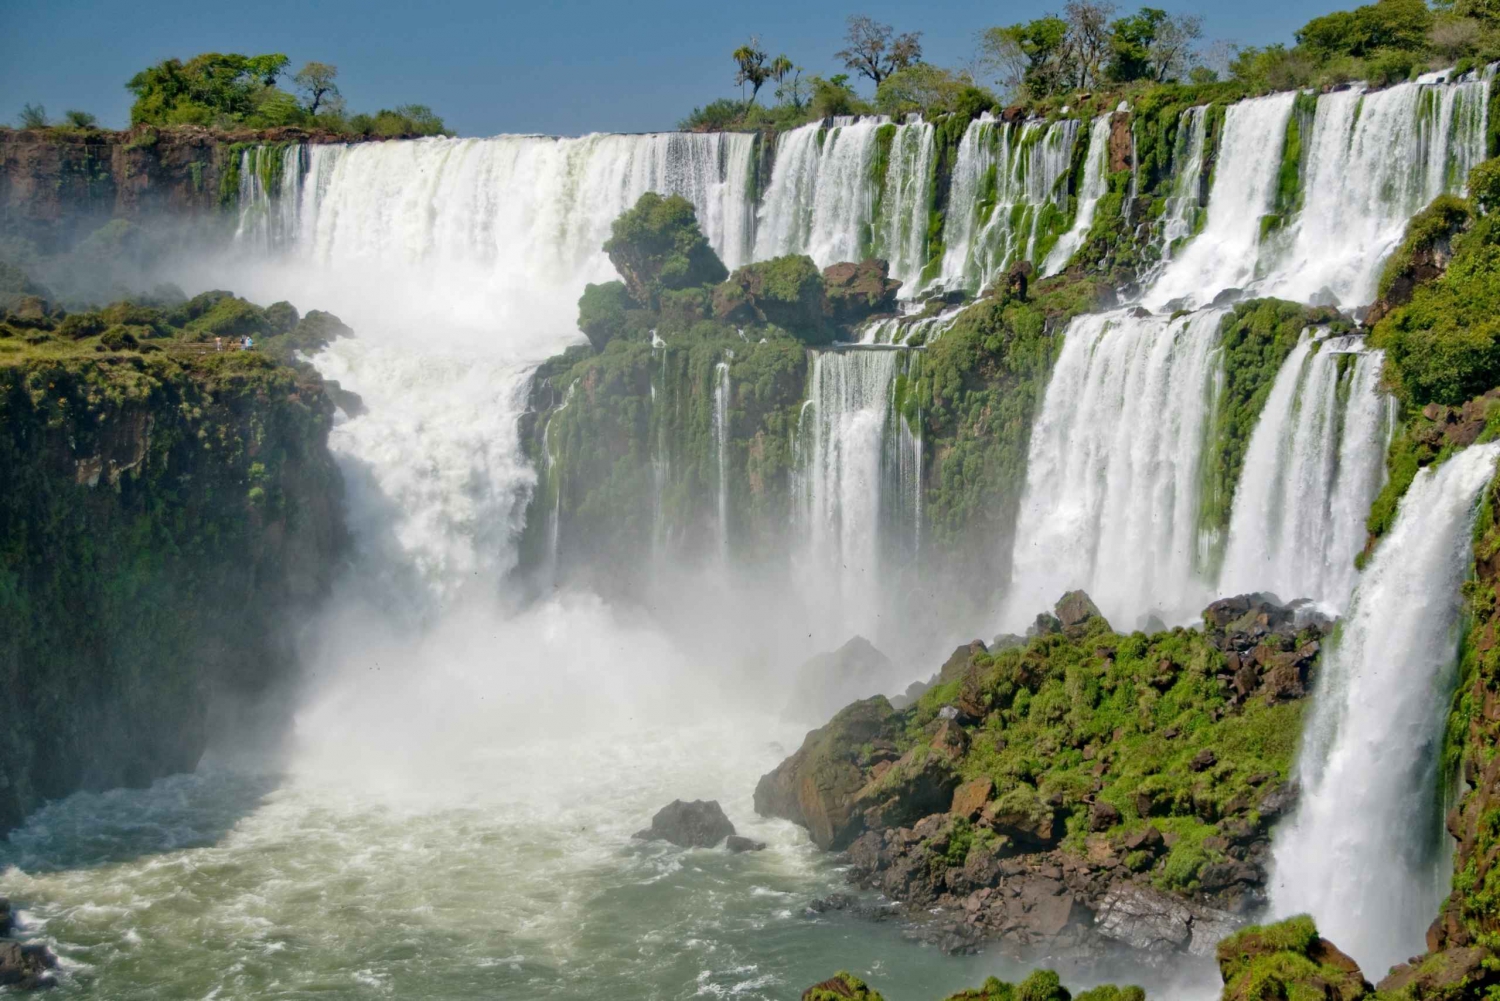 Puerto Iguazu: Argentiinan puolella putouksia